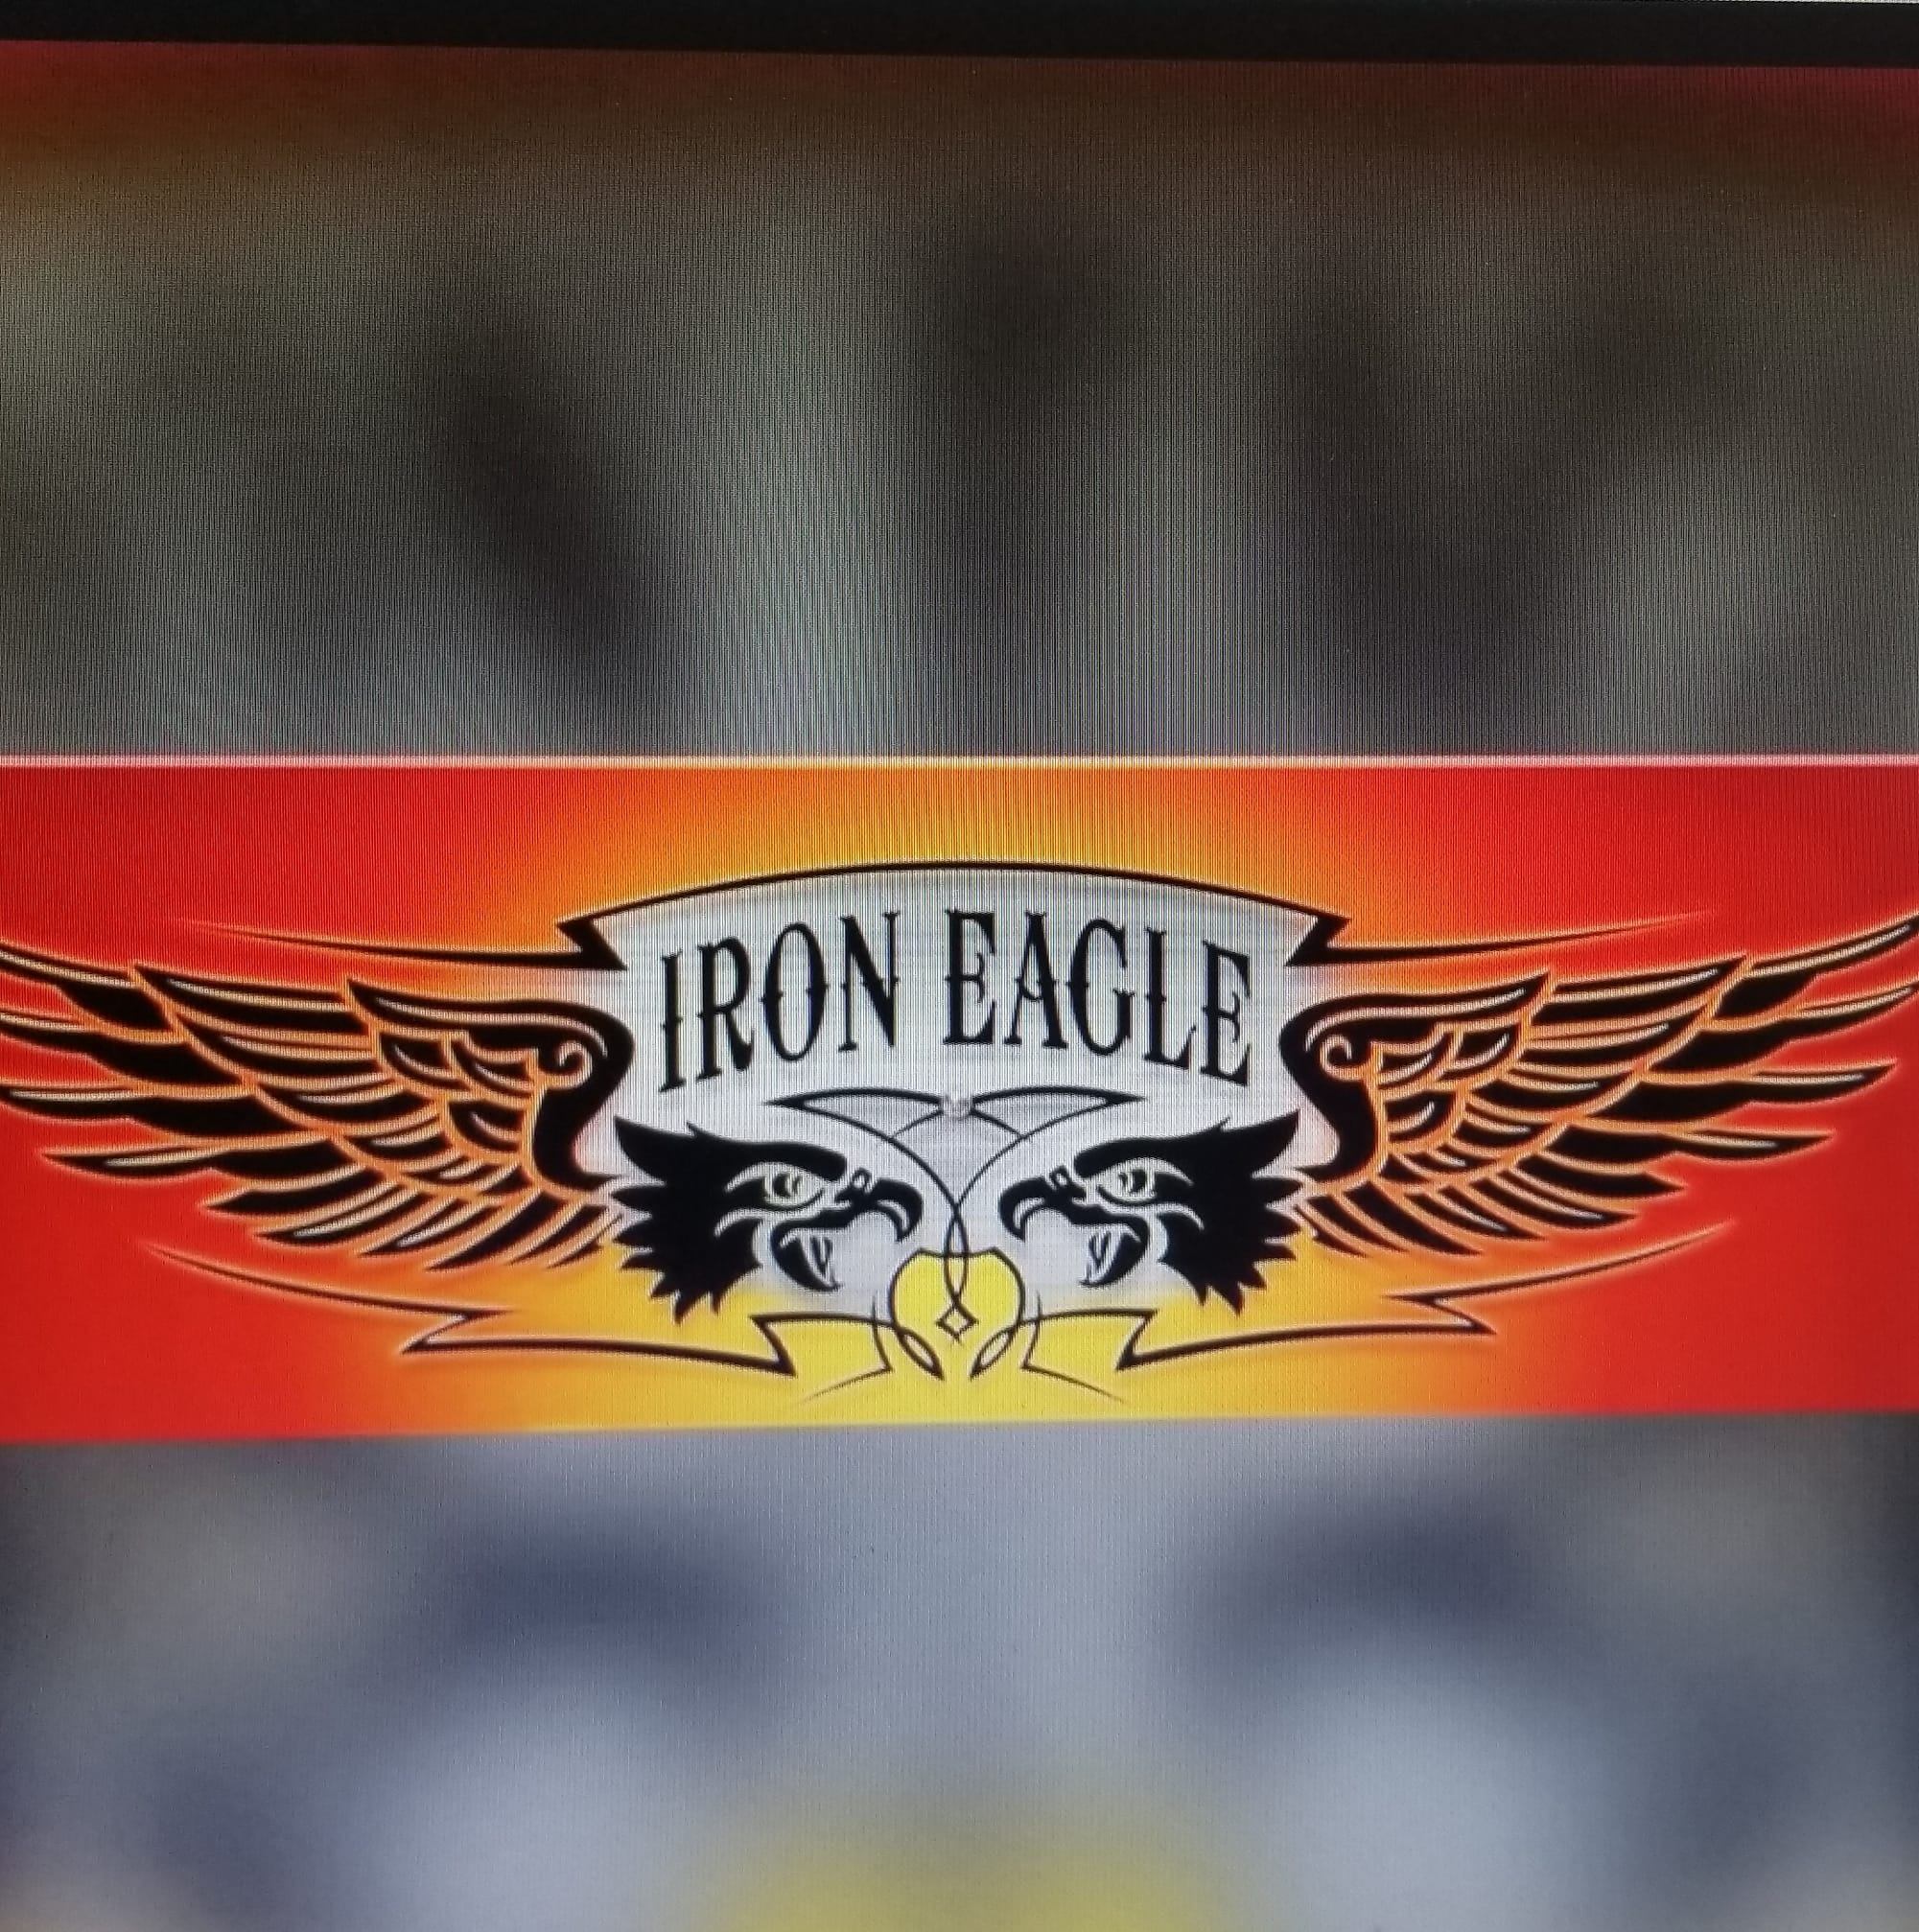 Iron Eagle Tire & Body Co.